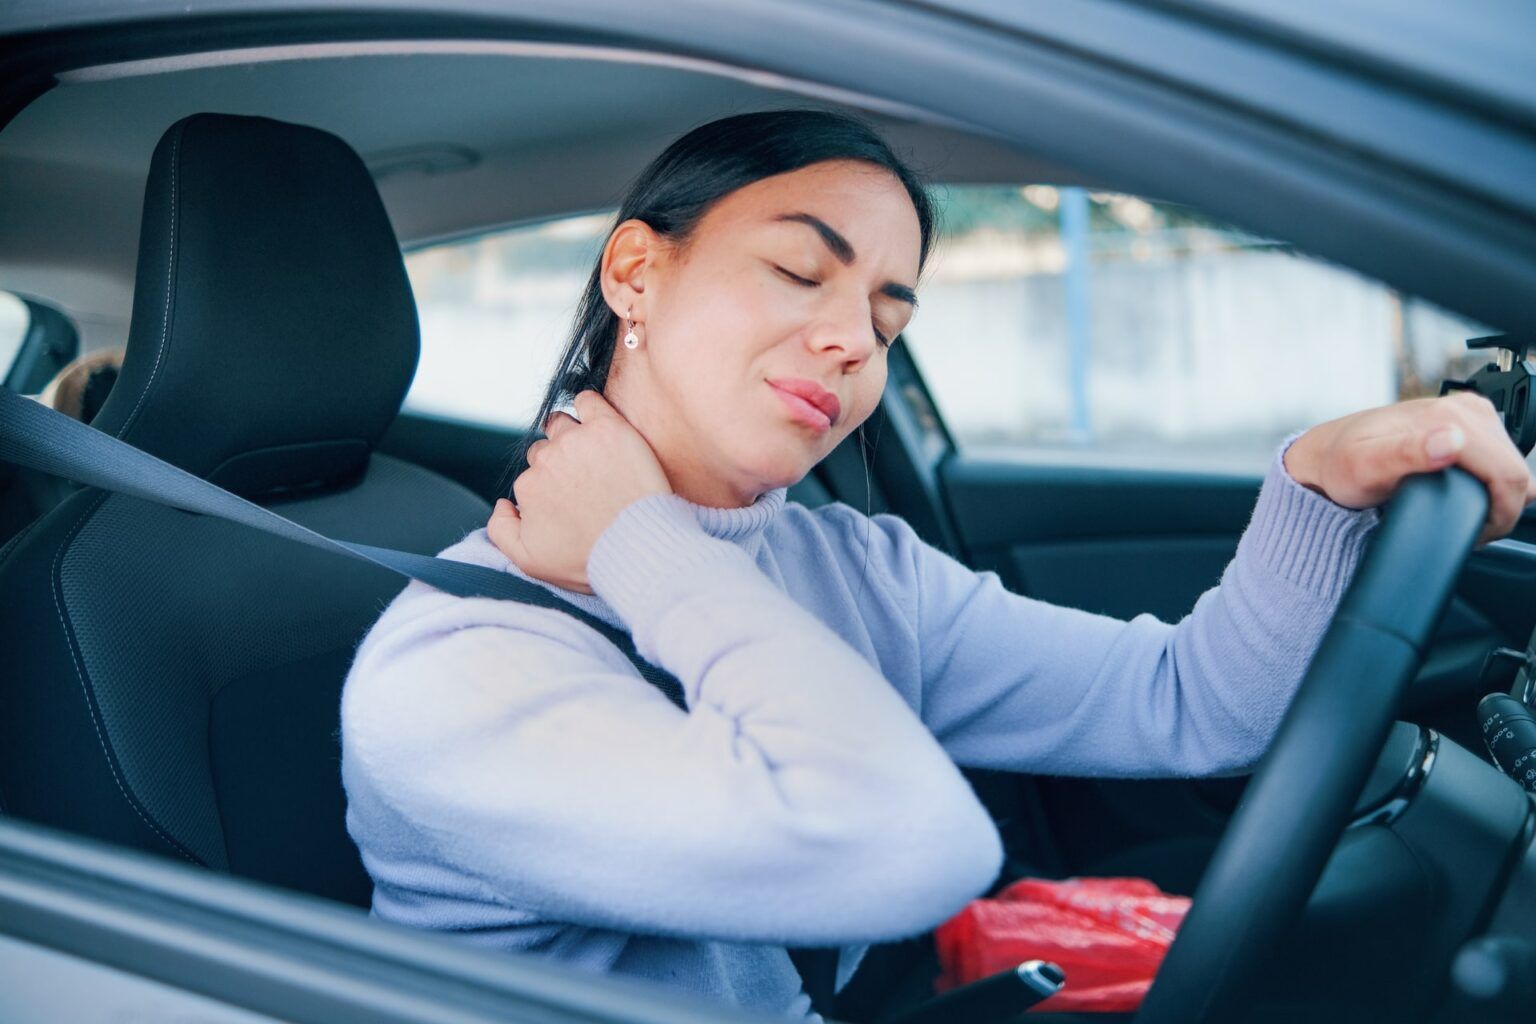 Women in vehicle having neck pain